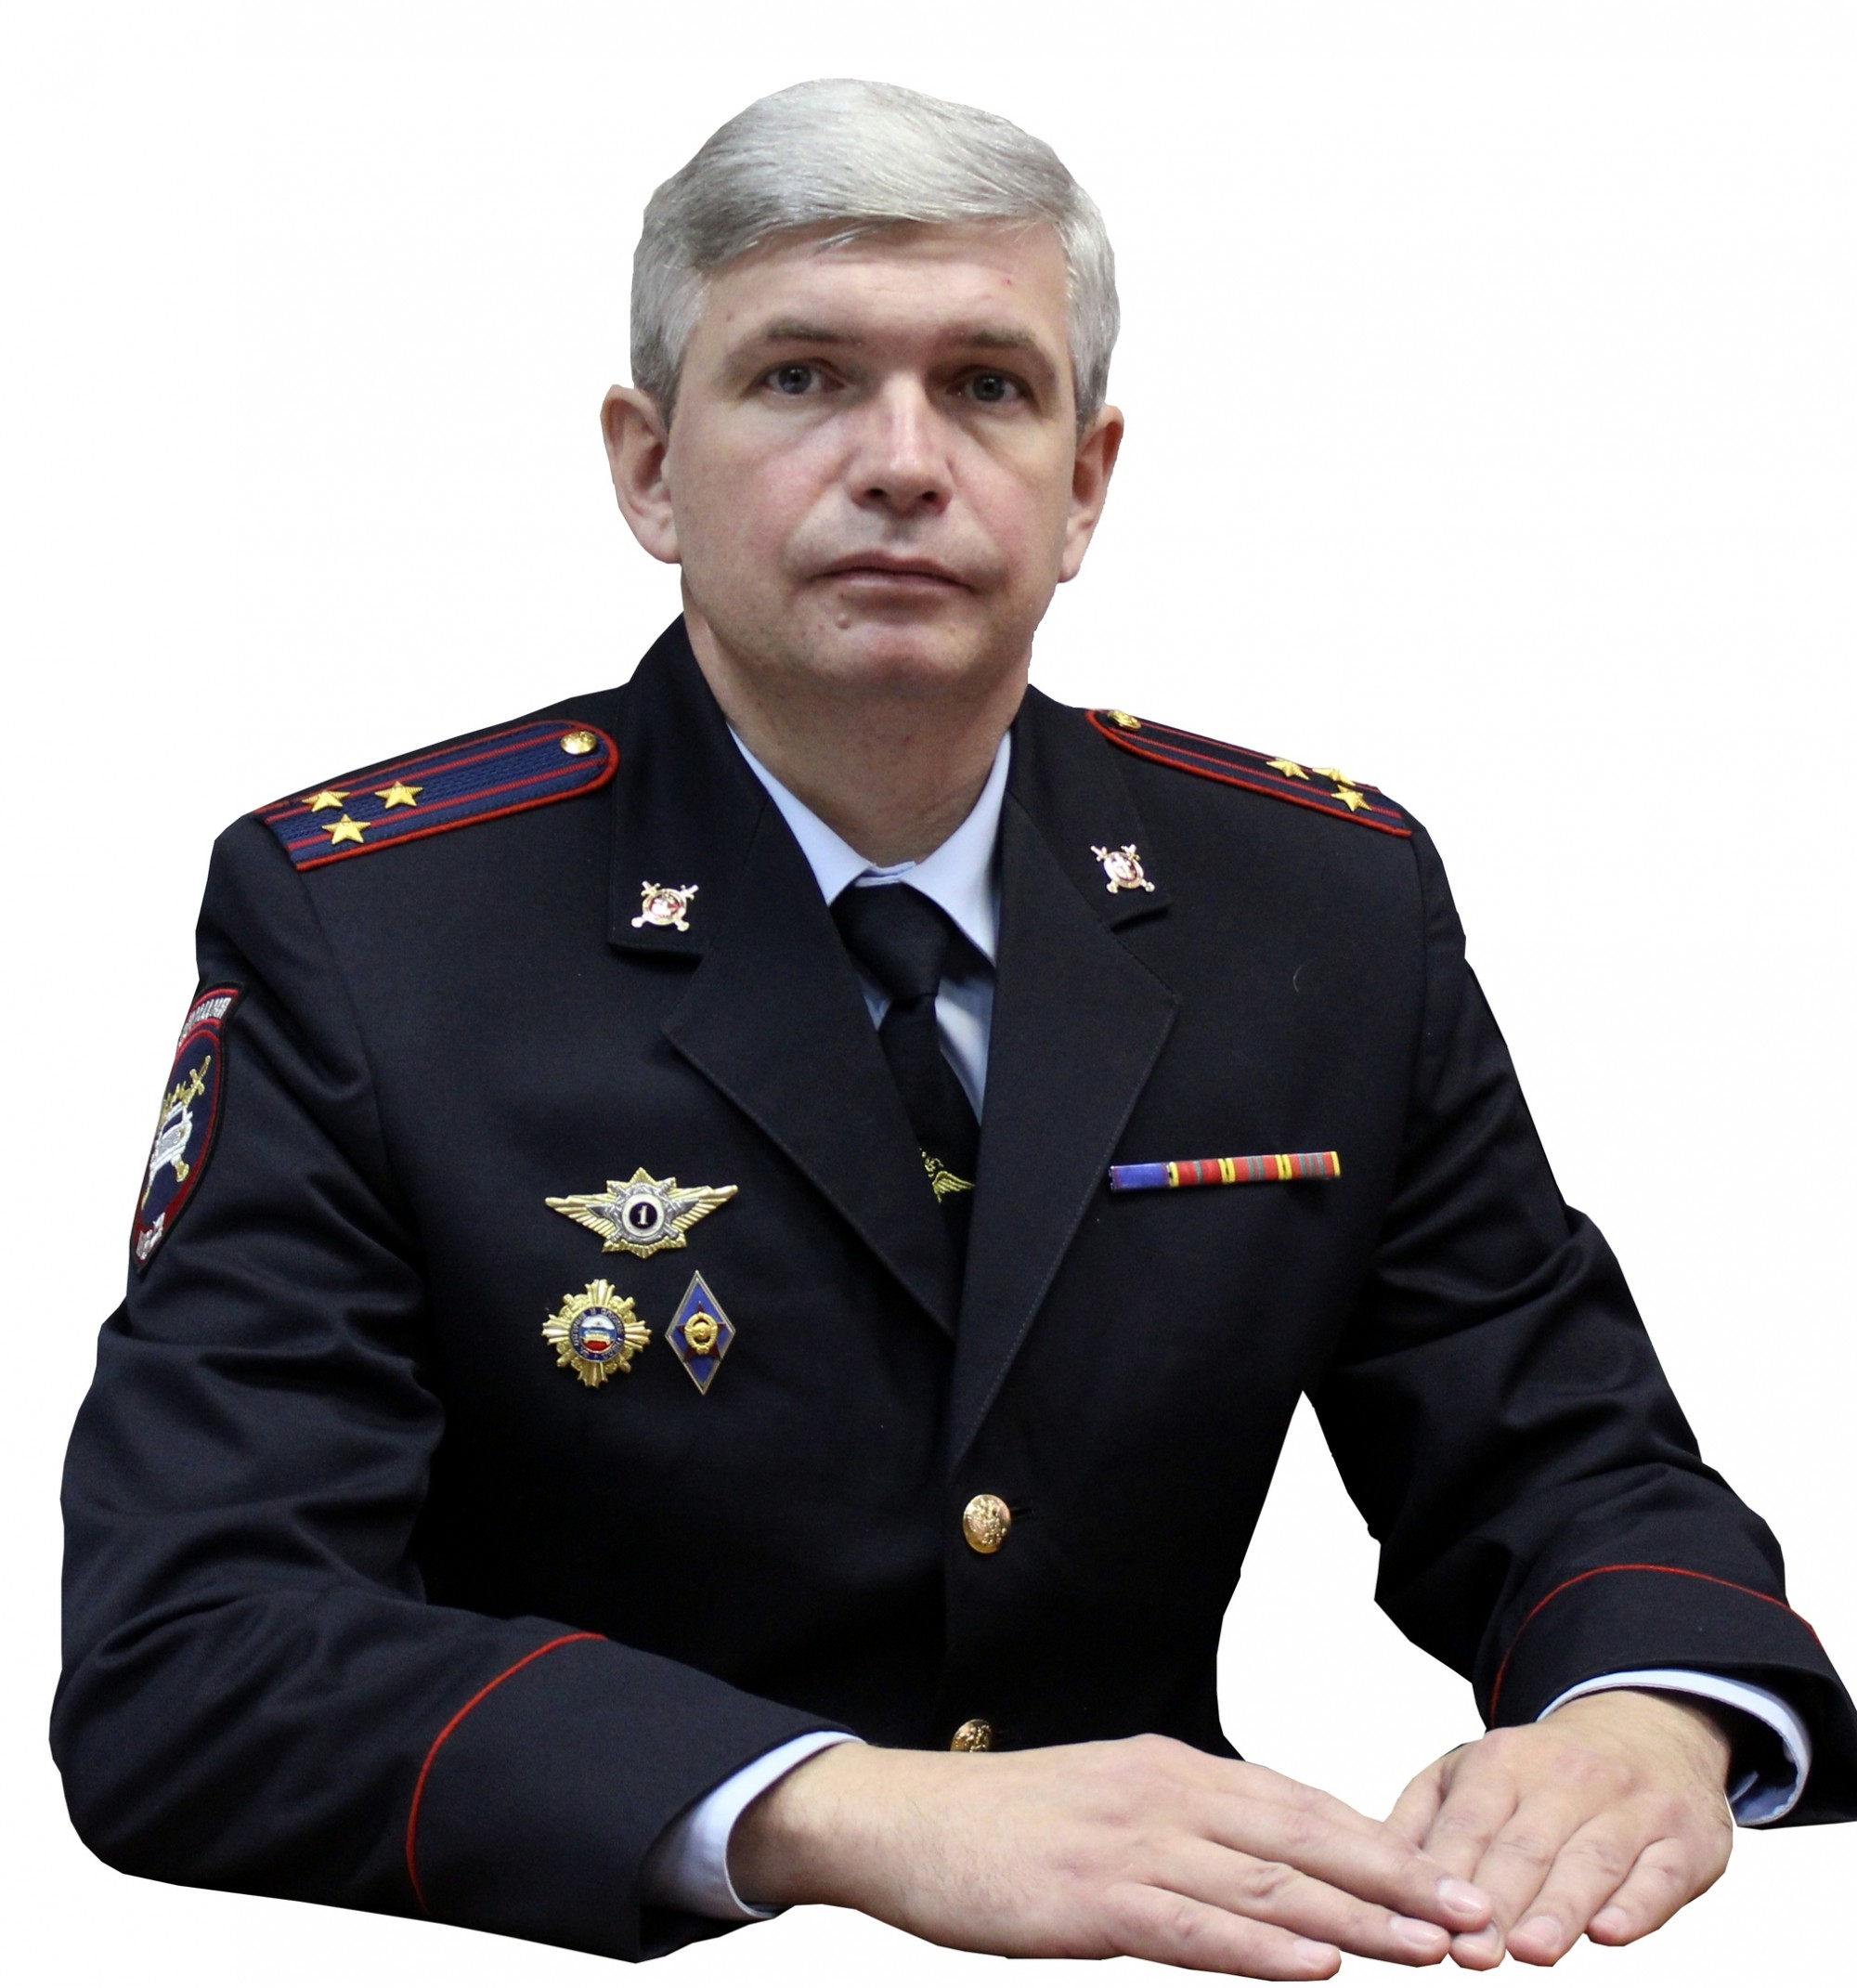 Григорьев Андрей Владимирович